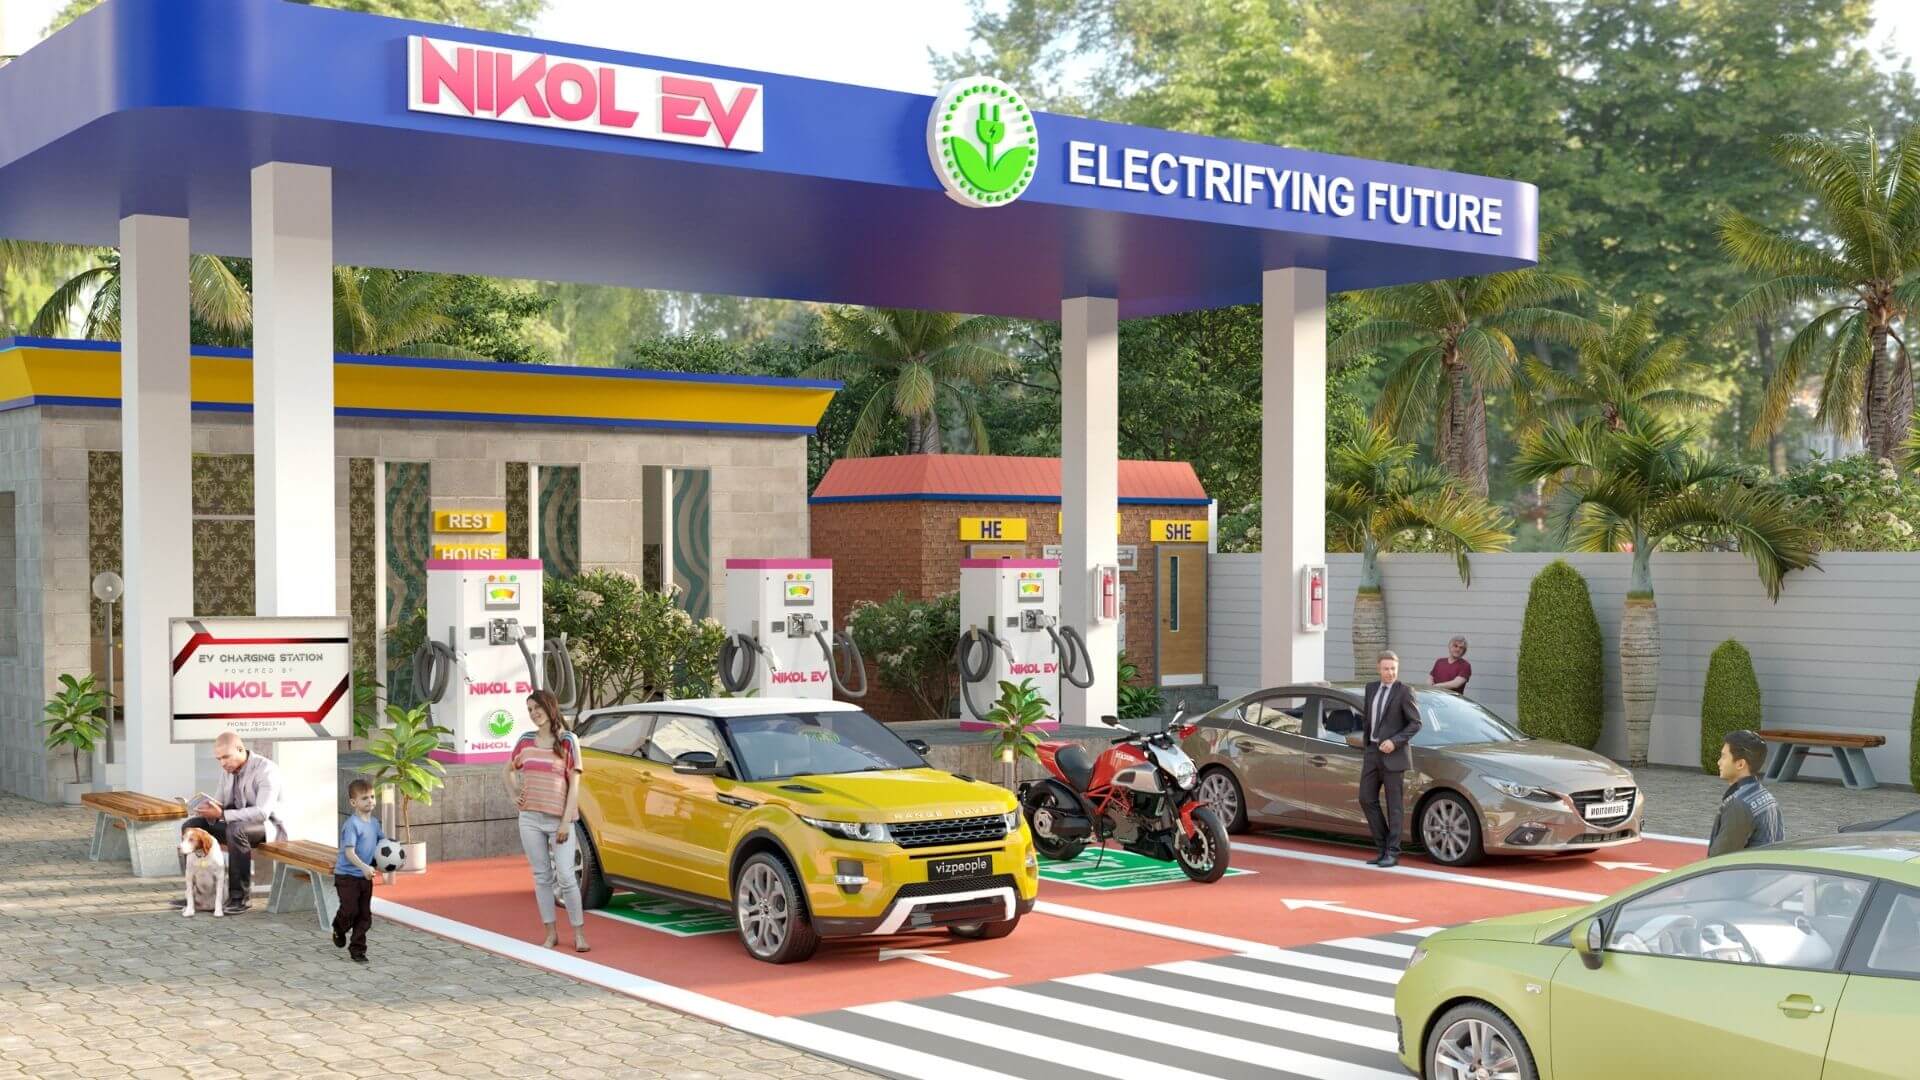 https://e-vehicleinfo.com/nikol-ev-to-setup-5000-electric-vehicle-chargers-by-2025/